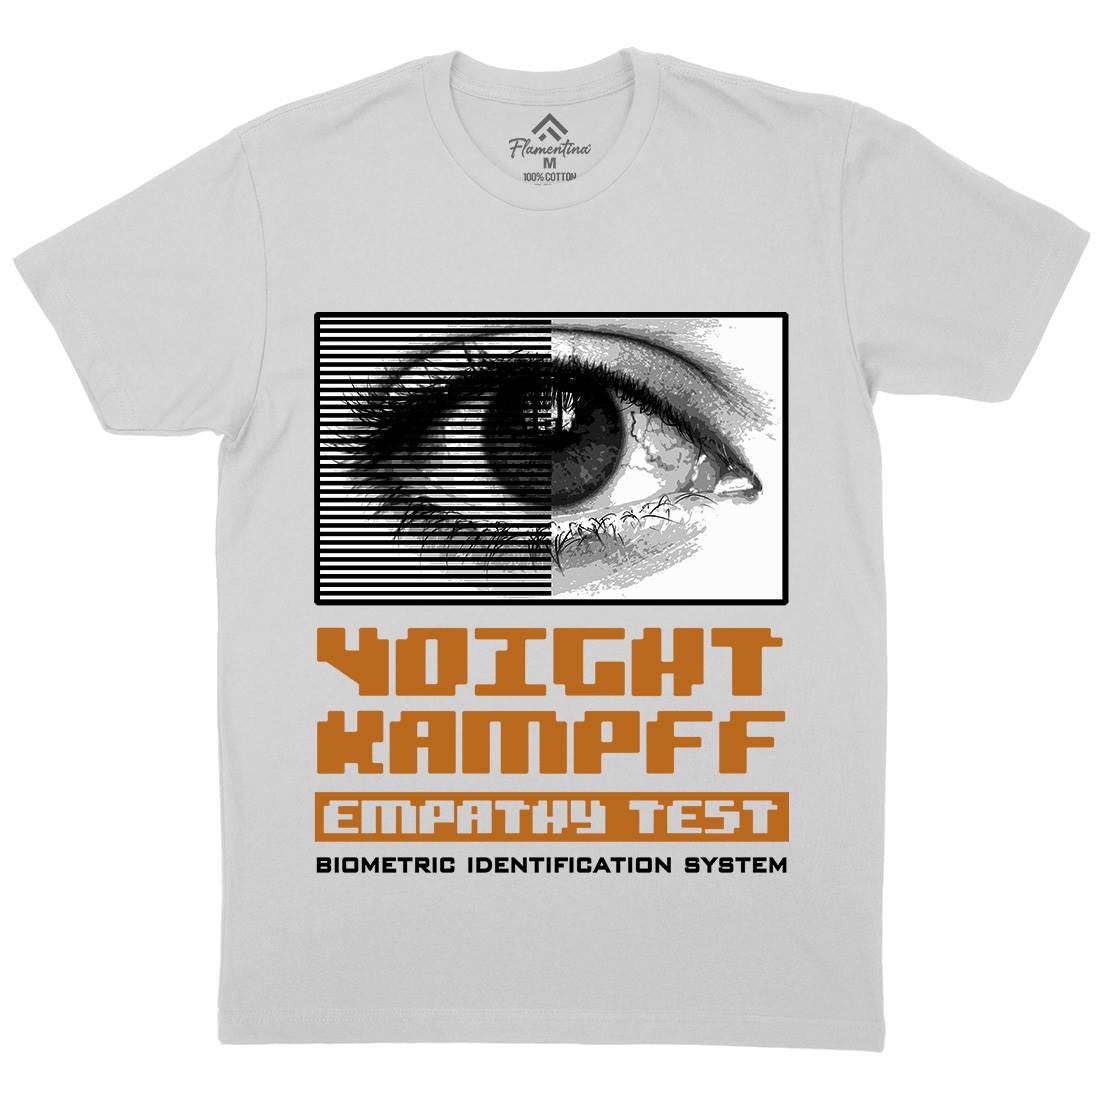 Voight Kampff Mens Crew Neck T-Shirt Space D405